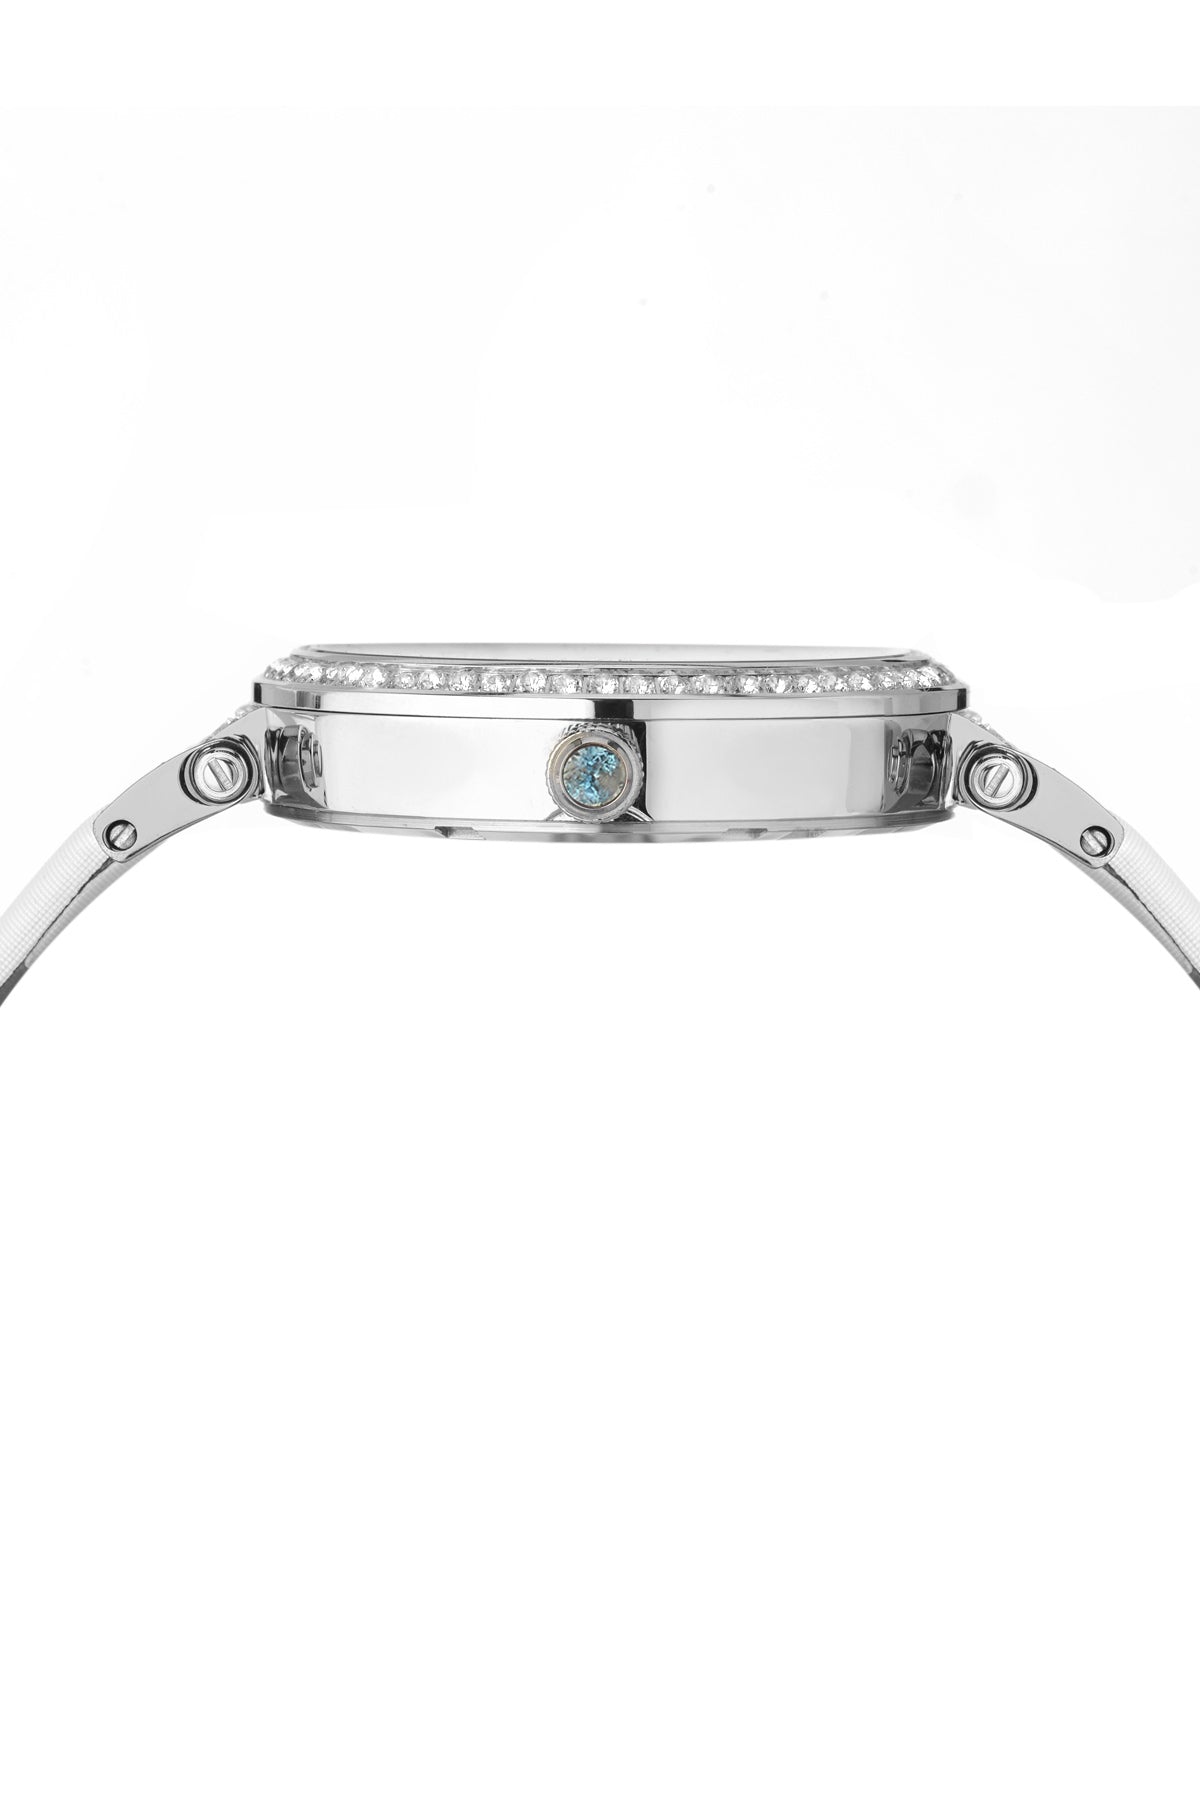 Porsamo Bleu Chantal Luxury Topaz Women's Watch, Satin Covered Genuine Leather Silver, White 673ACHL